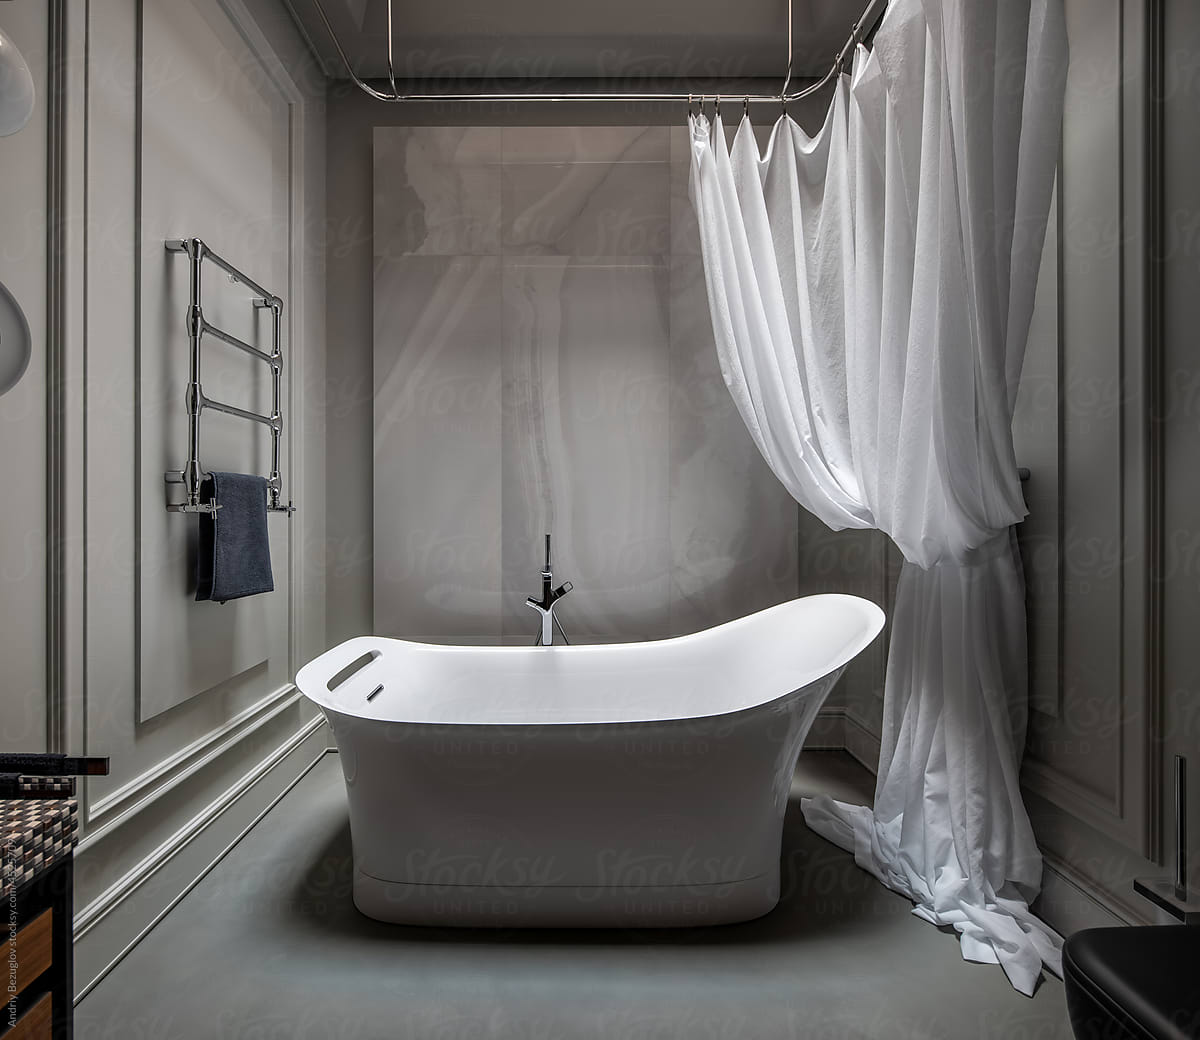 Interior in modern style with freestanding bathtub